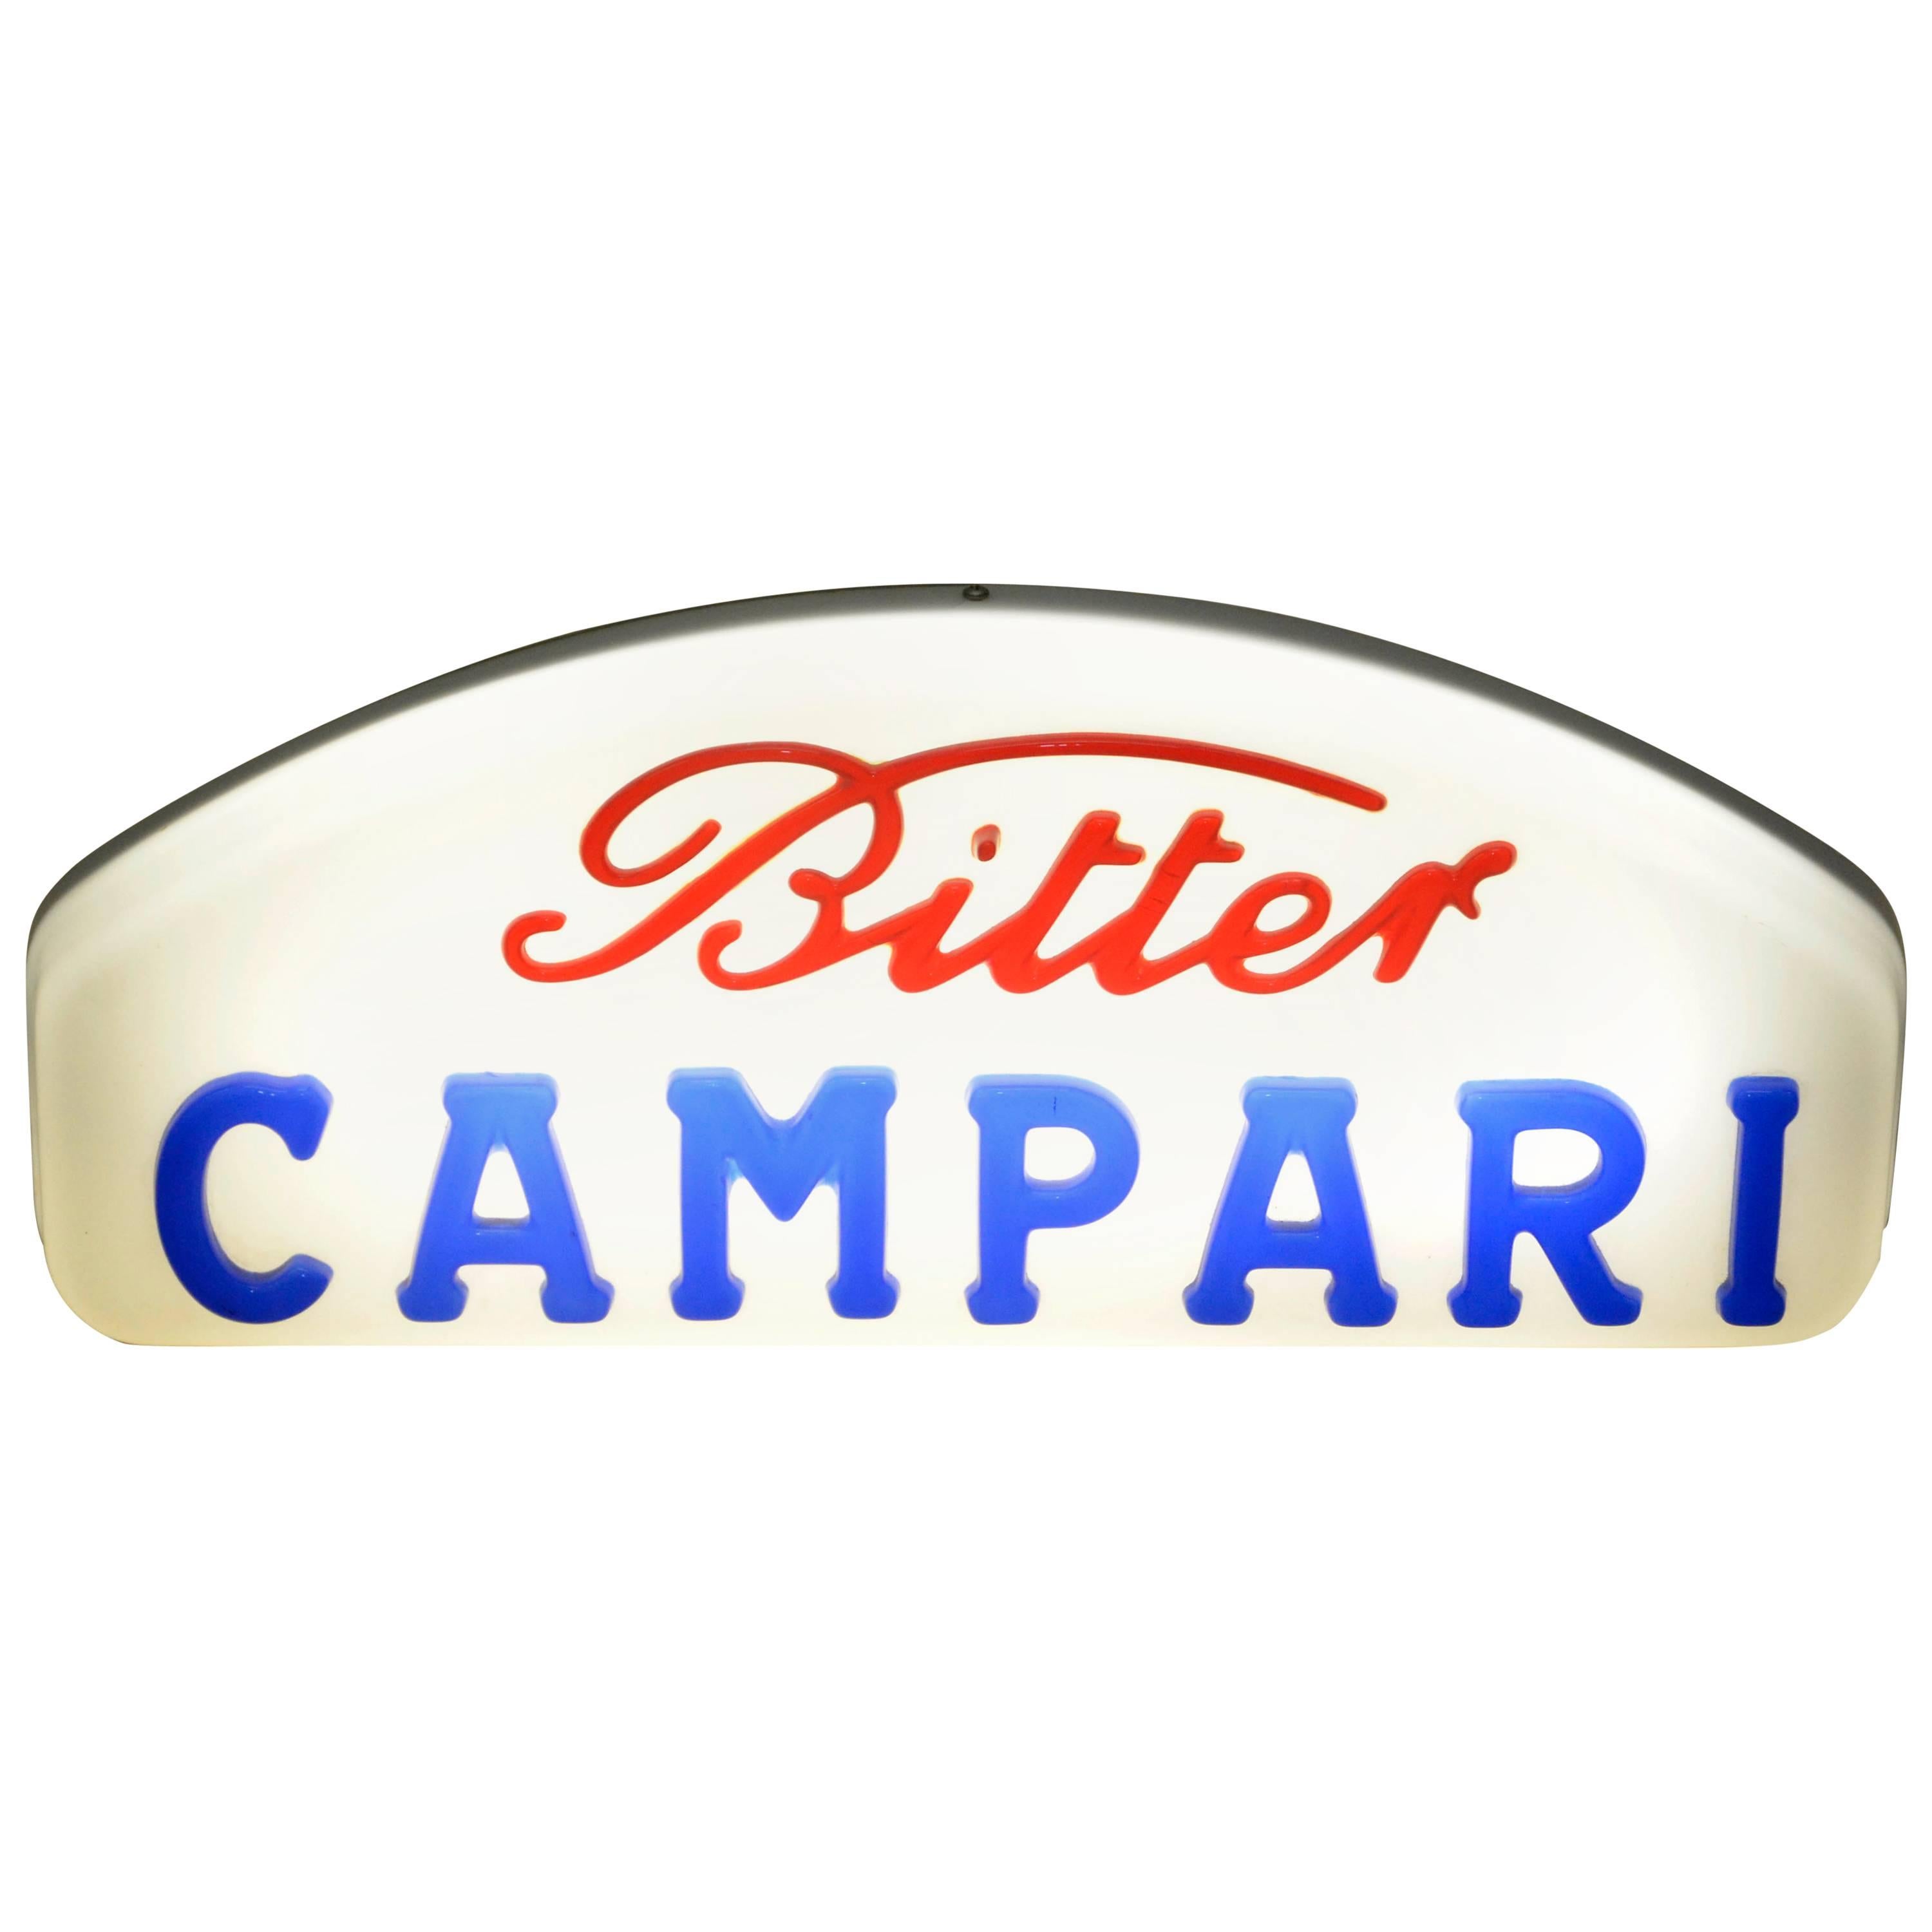 1960s Vintage Italian Bitter Campari Illuminated Sign